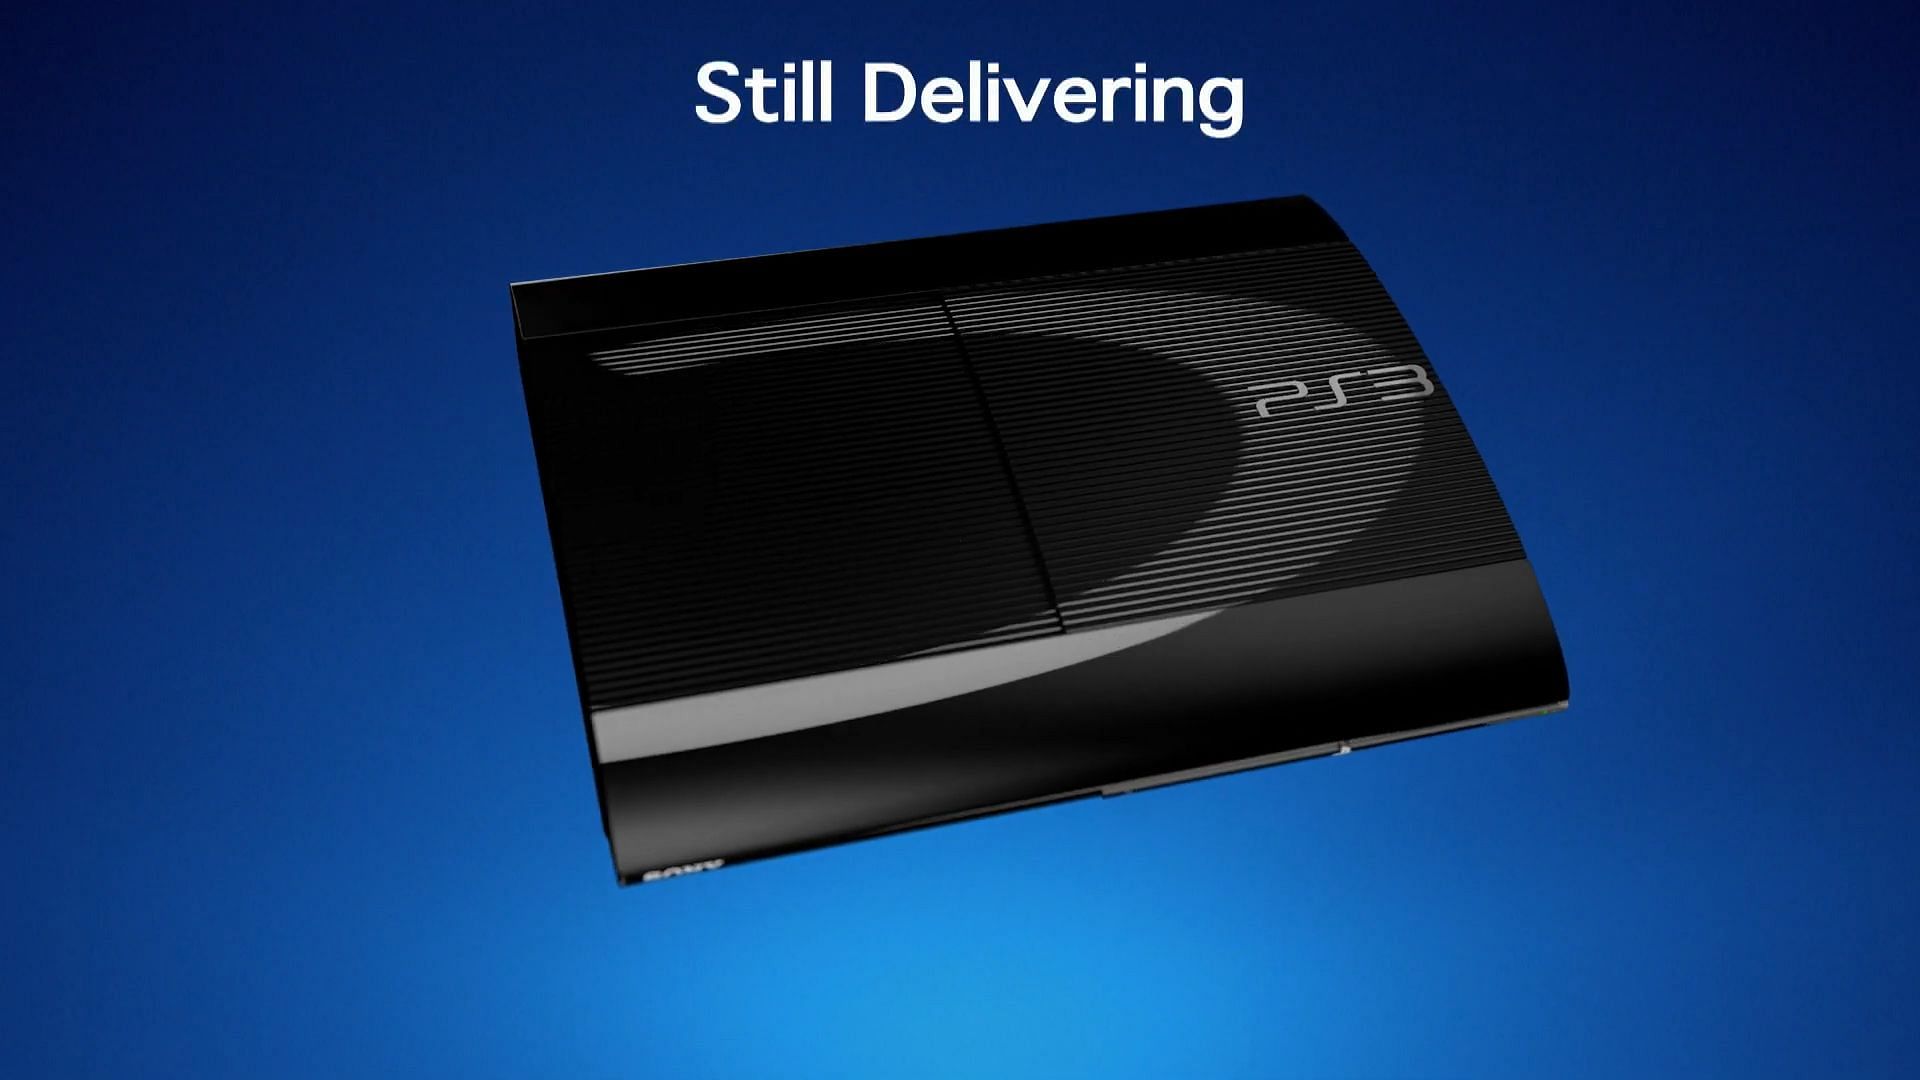 The Sony PS3 (Image via PlayStation)